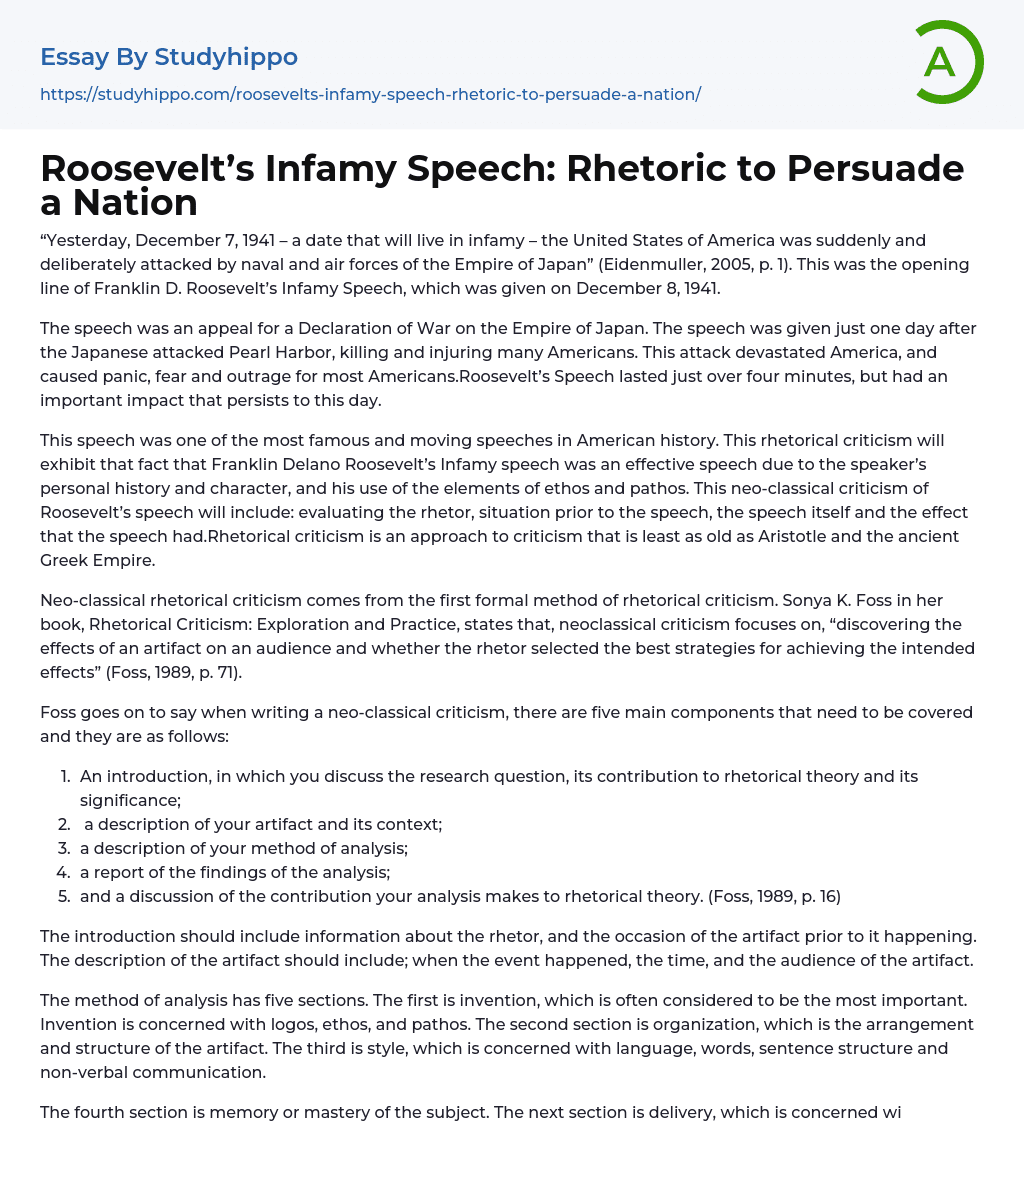 Roosevelt’s Infamy Speech: Rhetoric to Persuade a Nation Essay Example